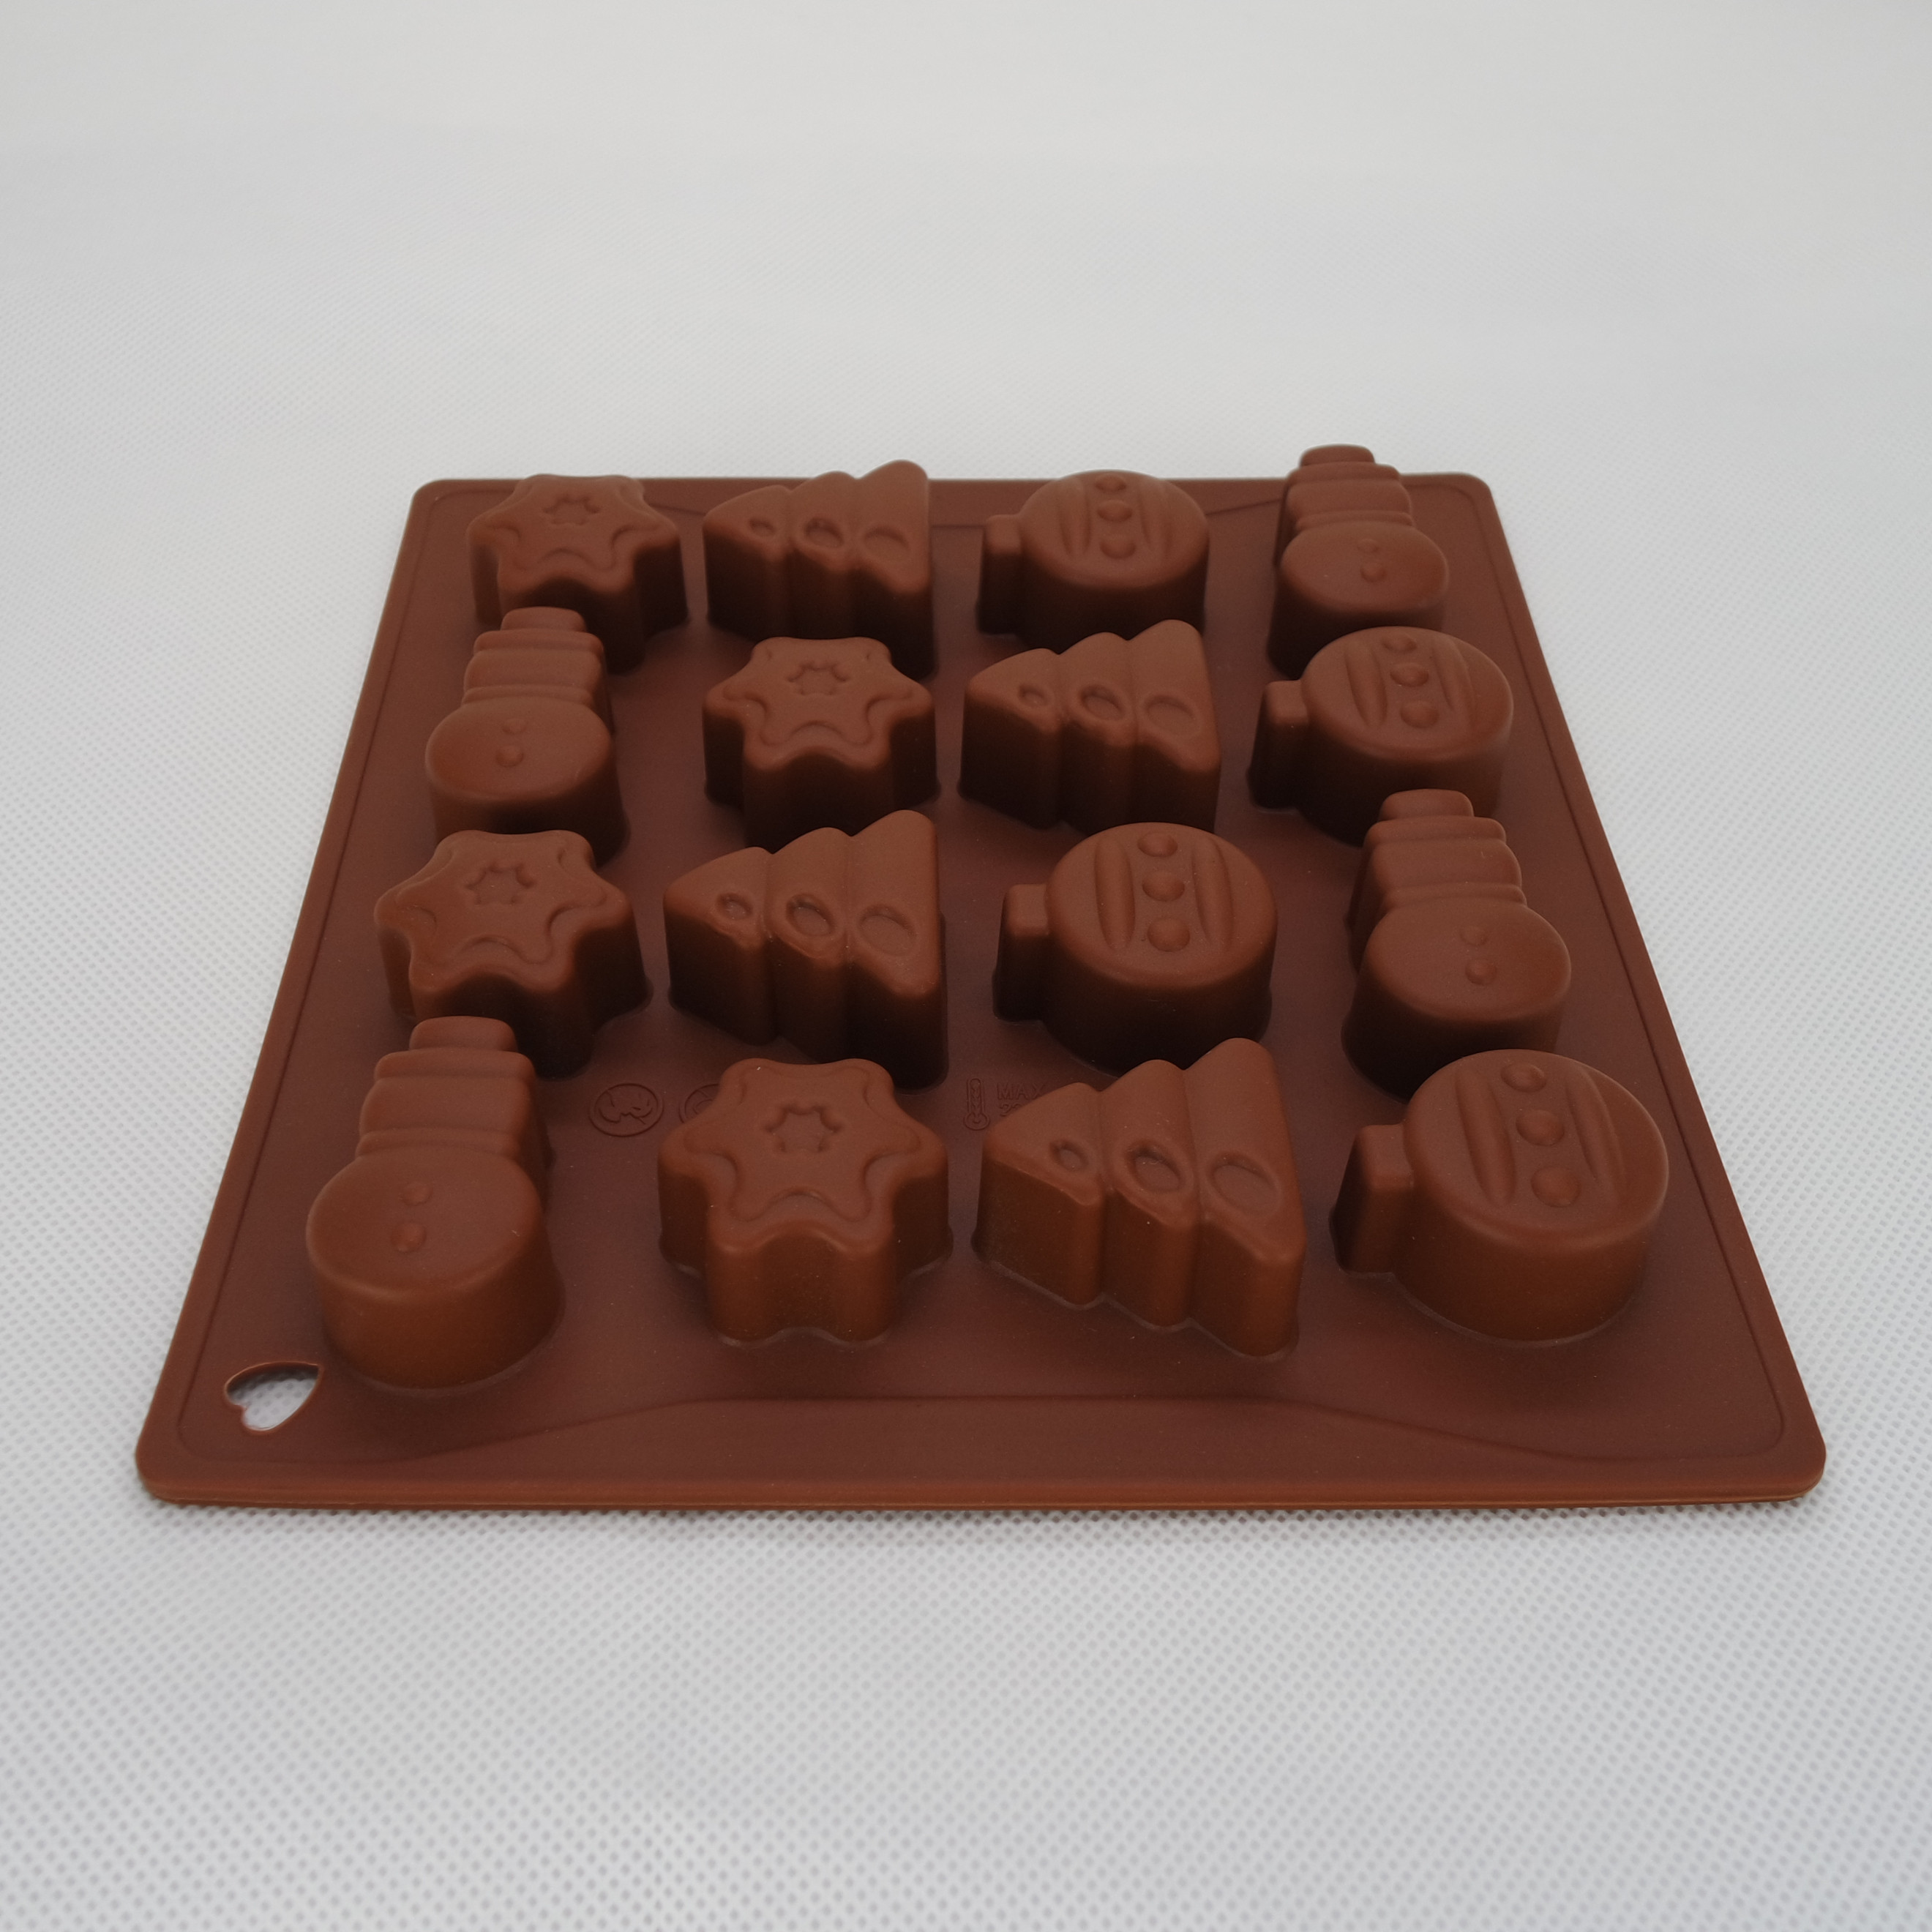 CXCH-016 硅胶巧克力模